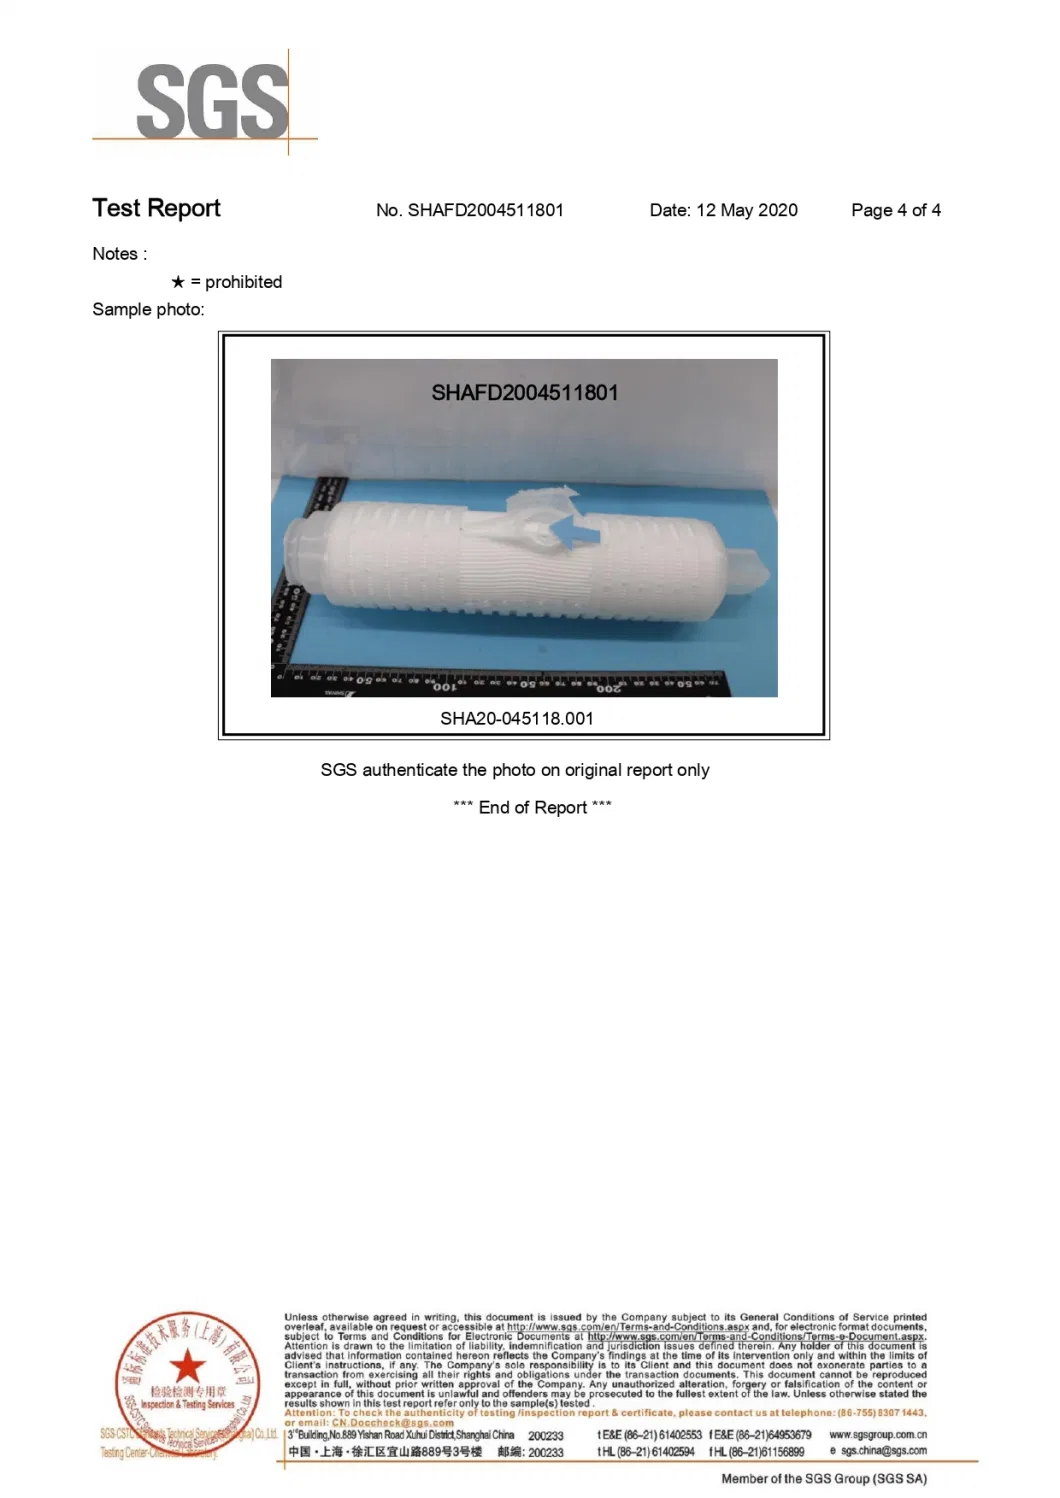 Filter PTFE Hydrophobic Membrane Pleated Depth Water Treatment Filter Cartridge